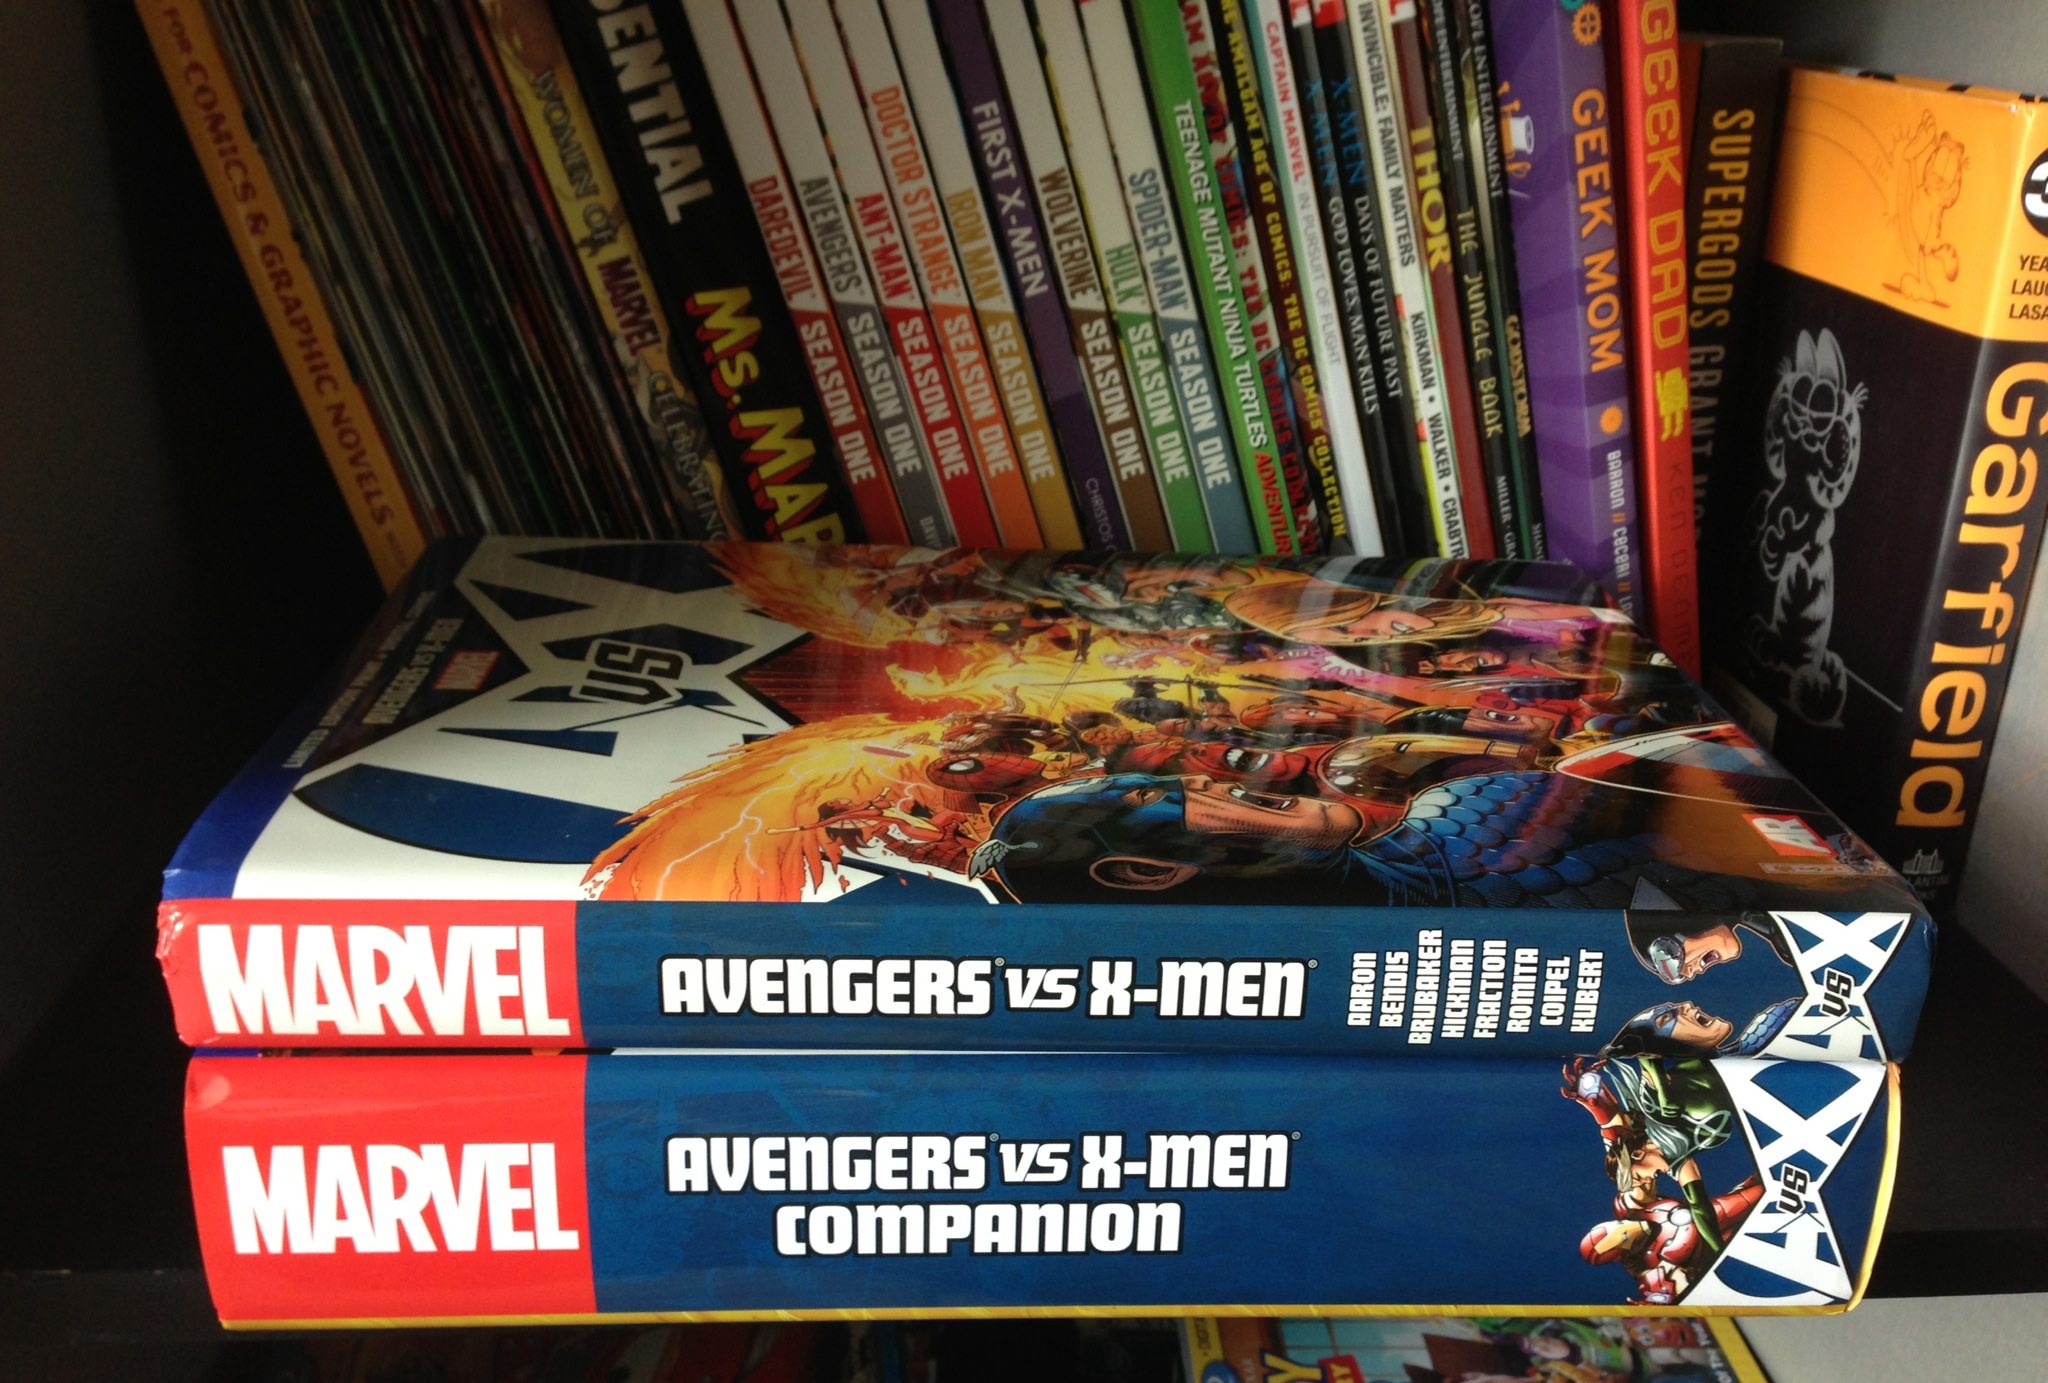 Avengers vs. X-Men Companion  Image: Dakster Sullivan